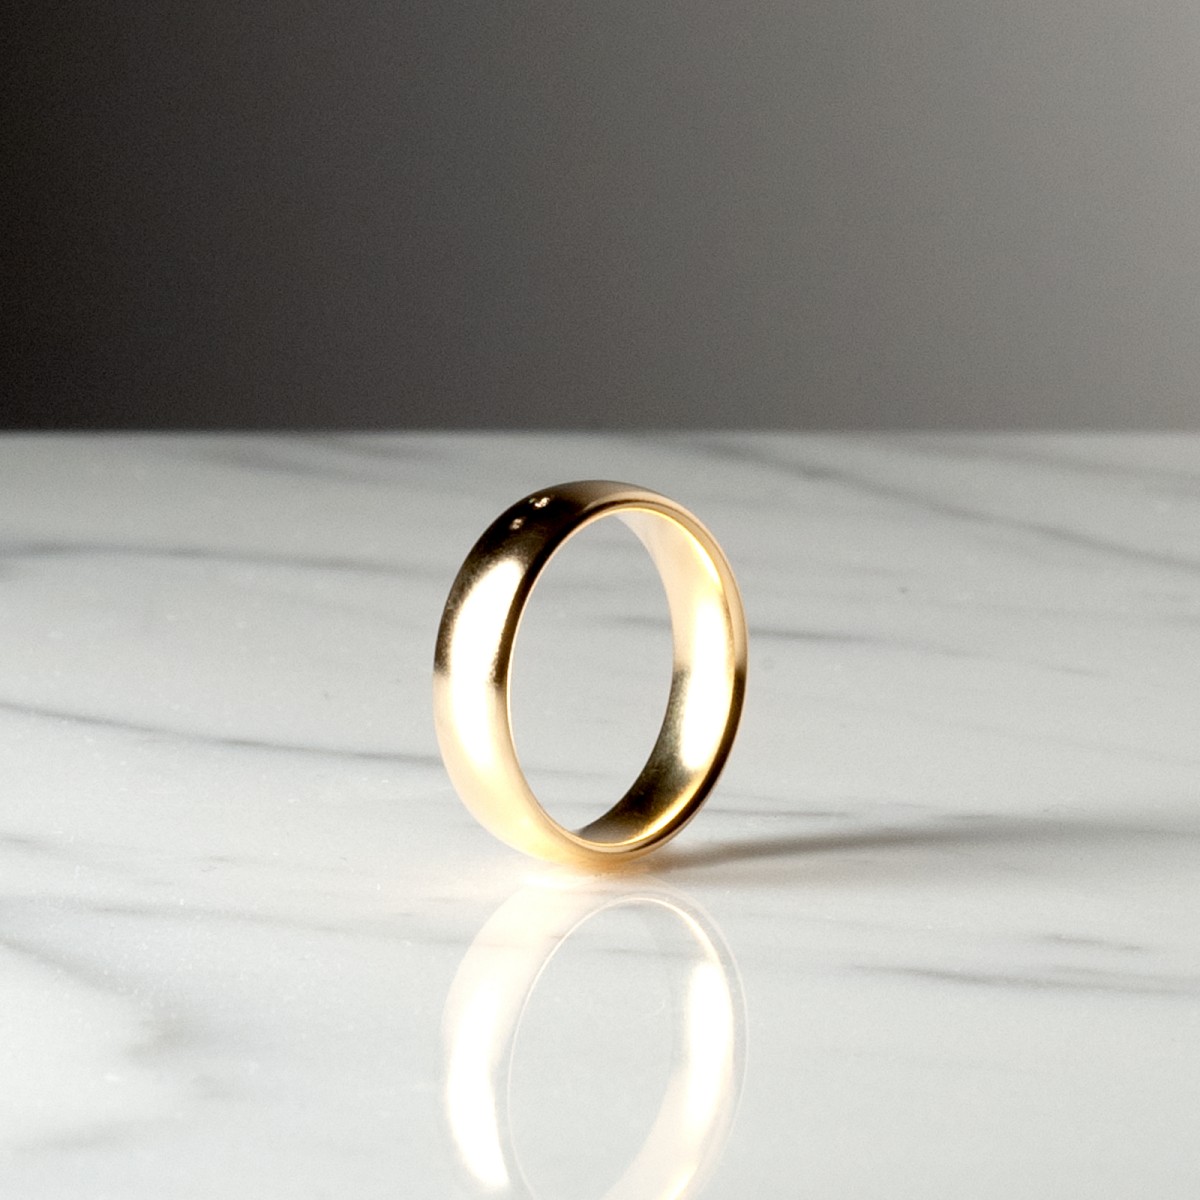 OVALE 6X2 2058 - Wedding ring handmade in France